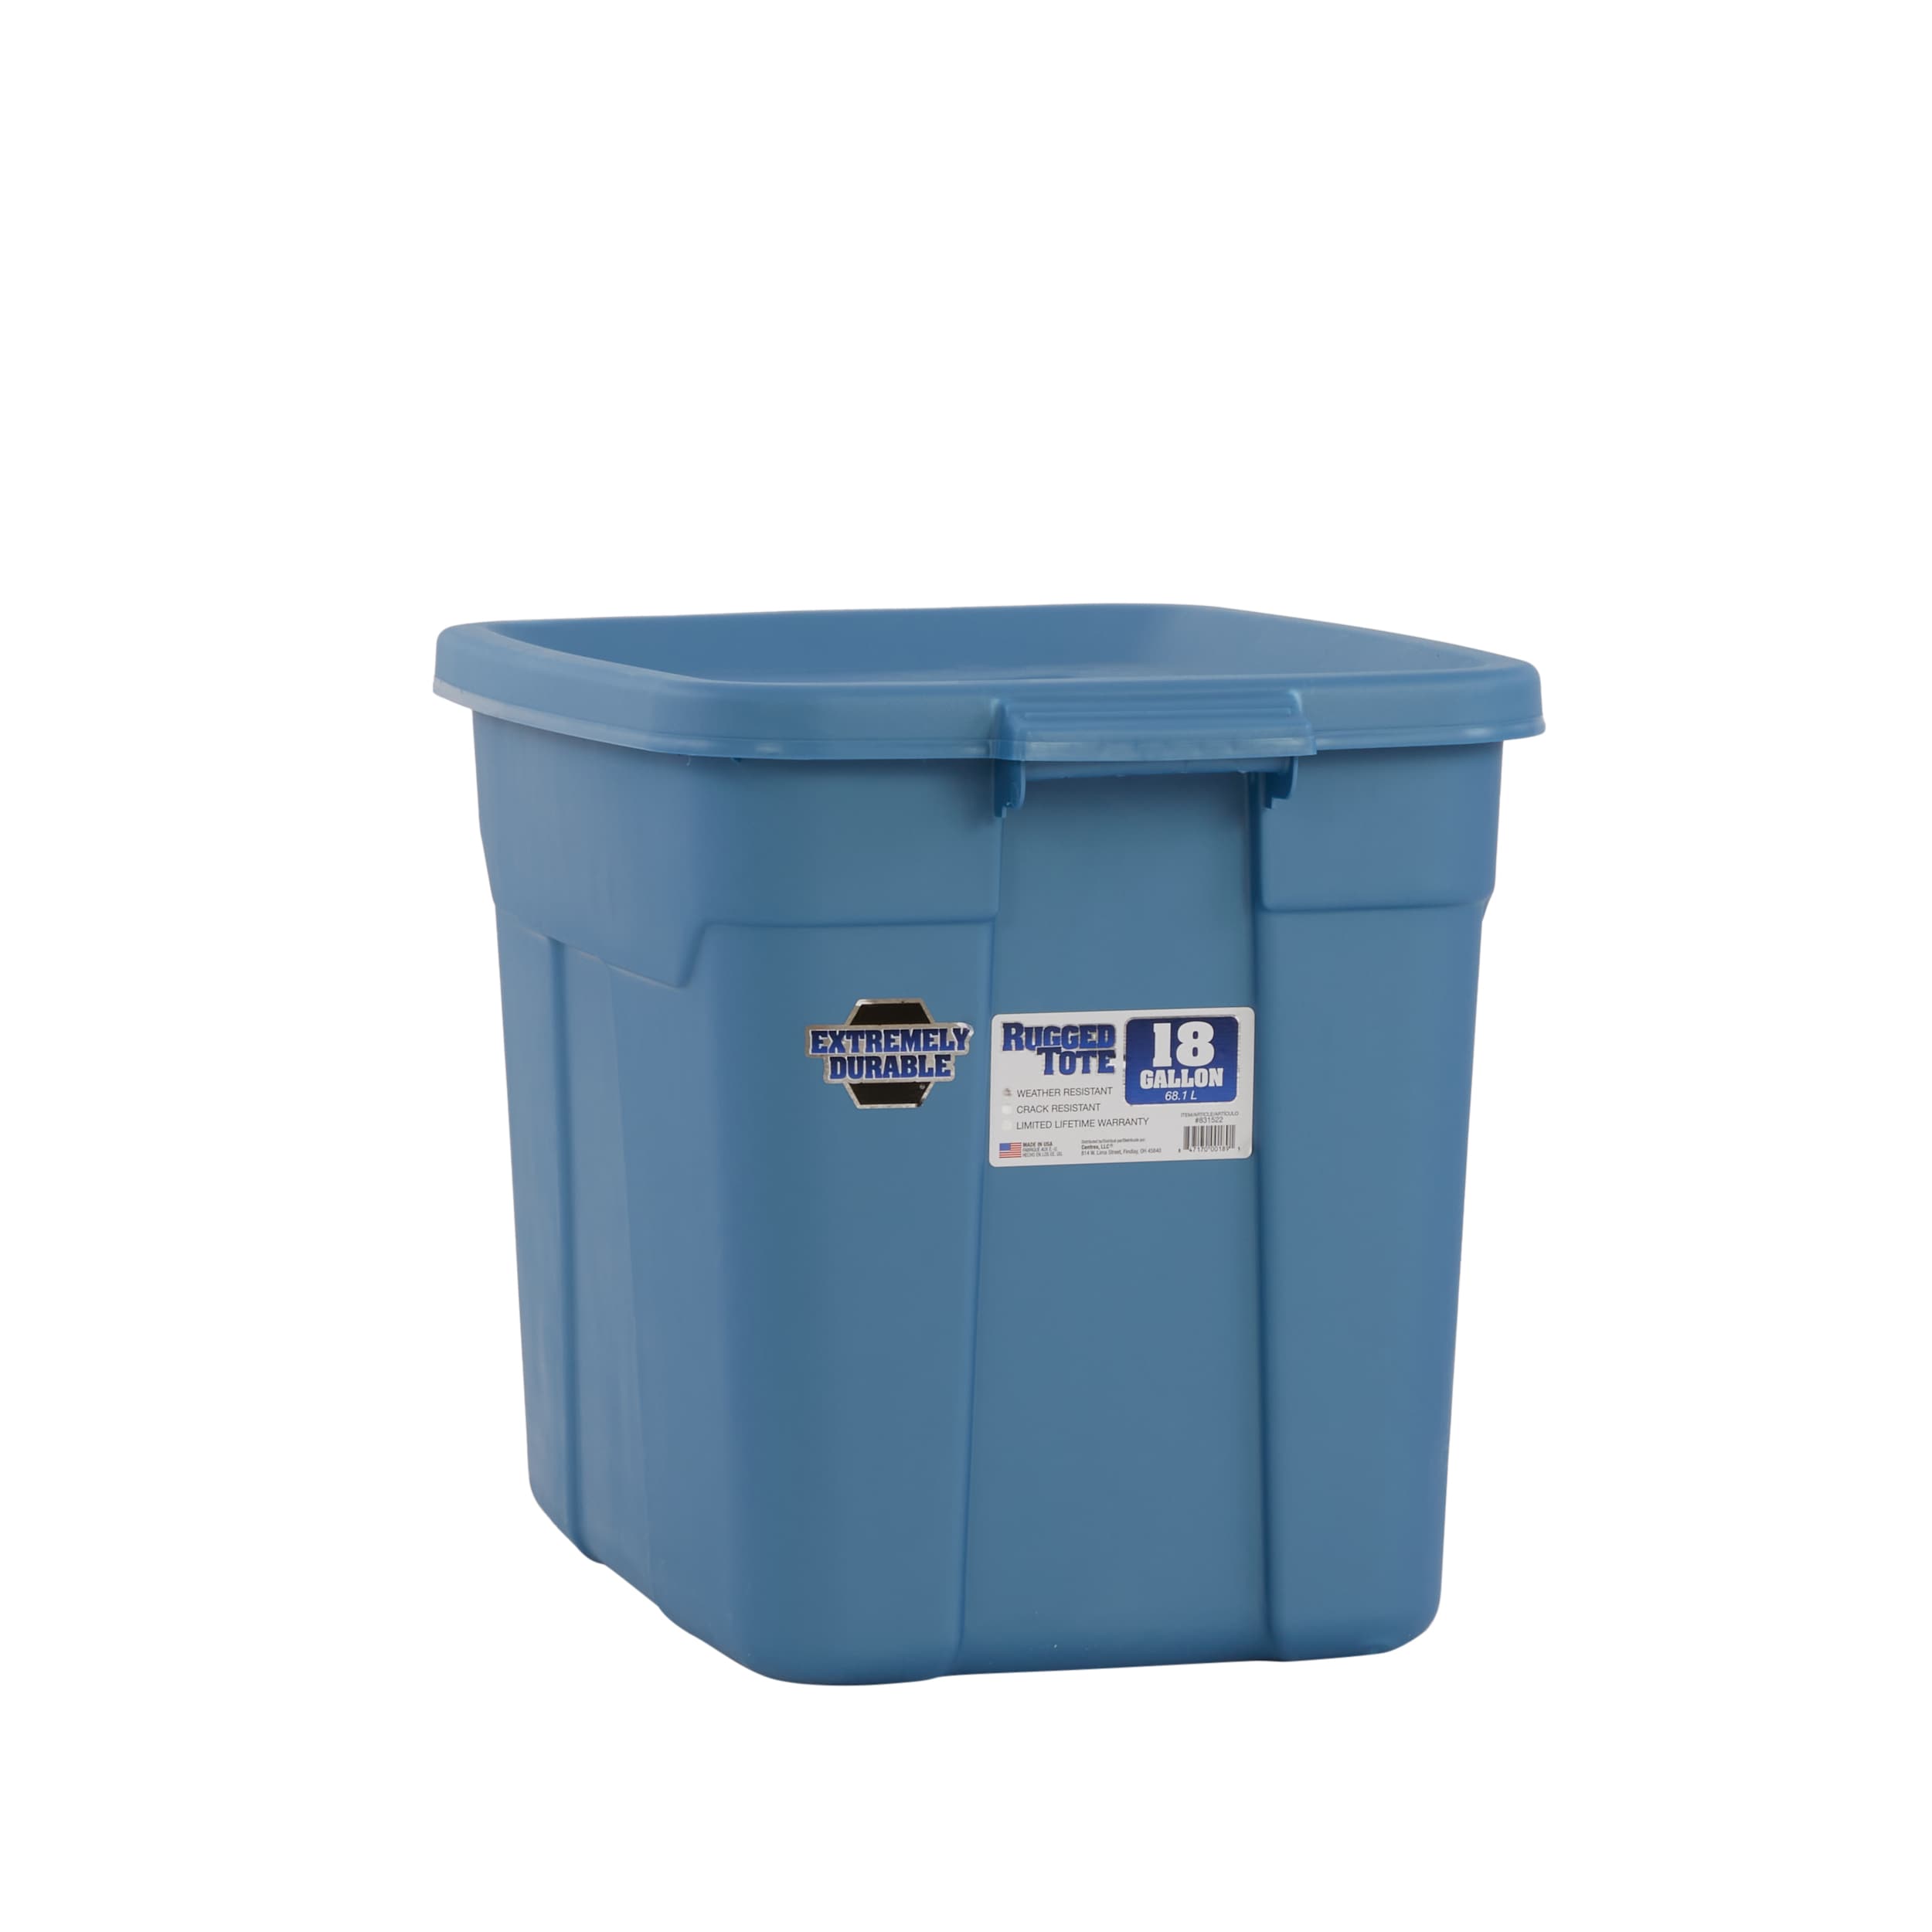 Centrex Rugged Tote Large 31-Gallons (124-Quart) Metallic Blue